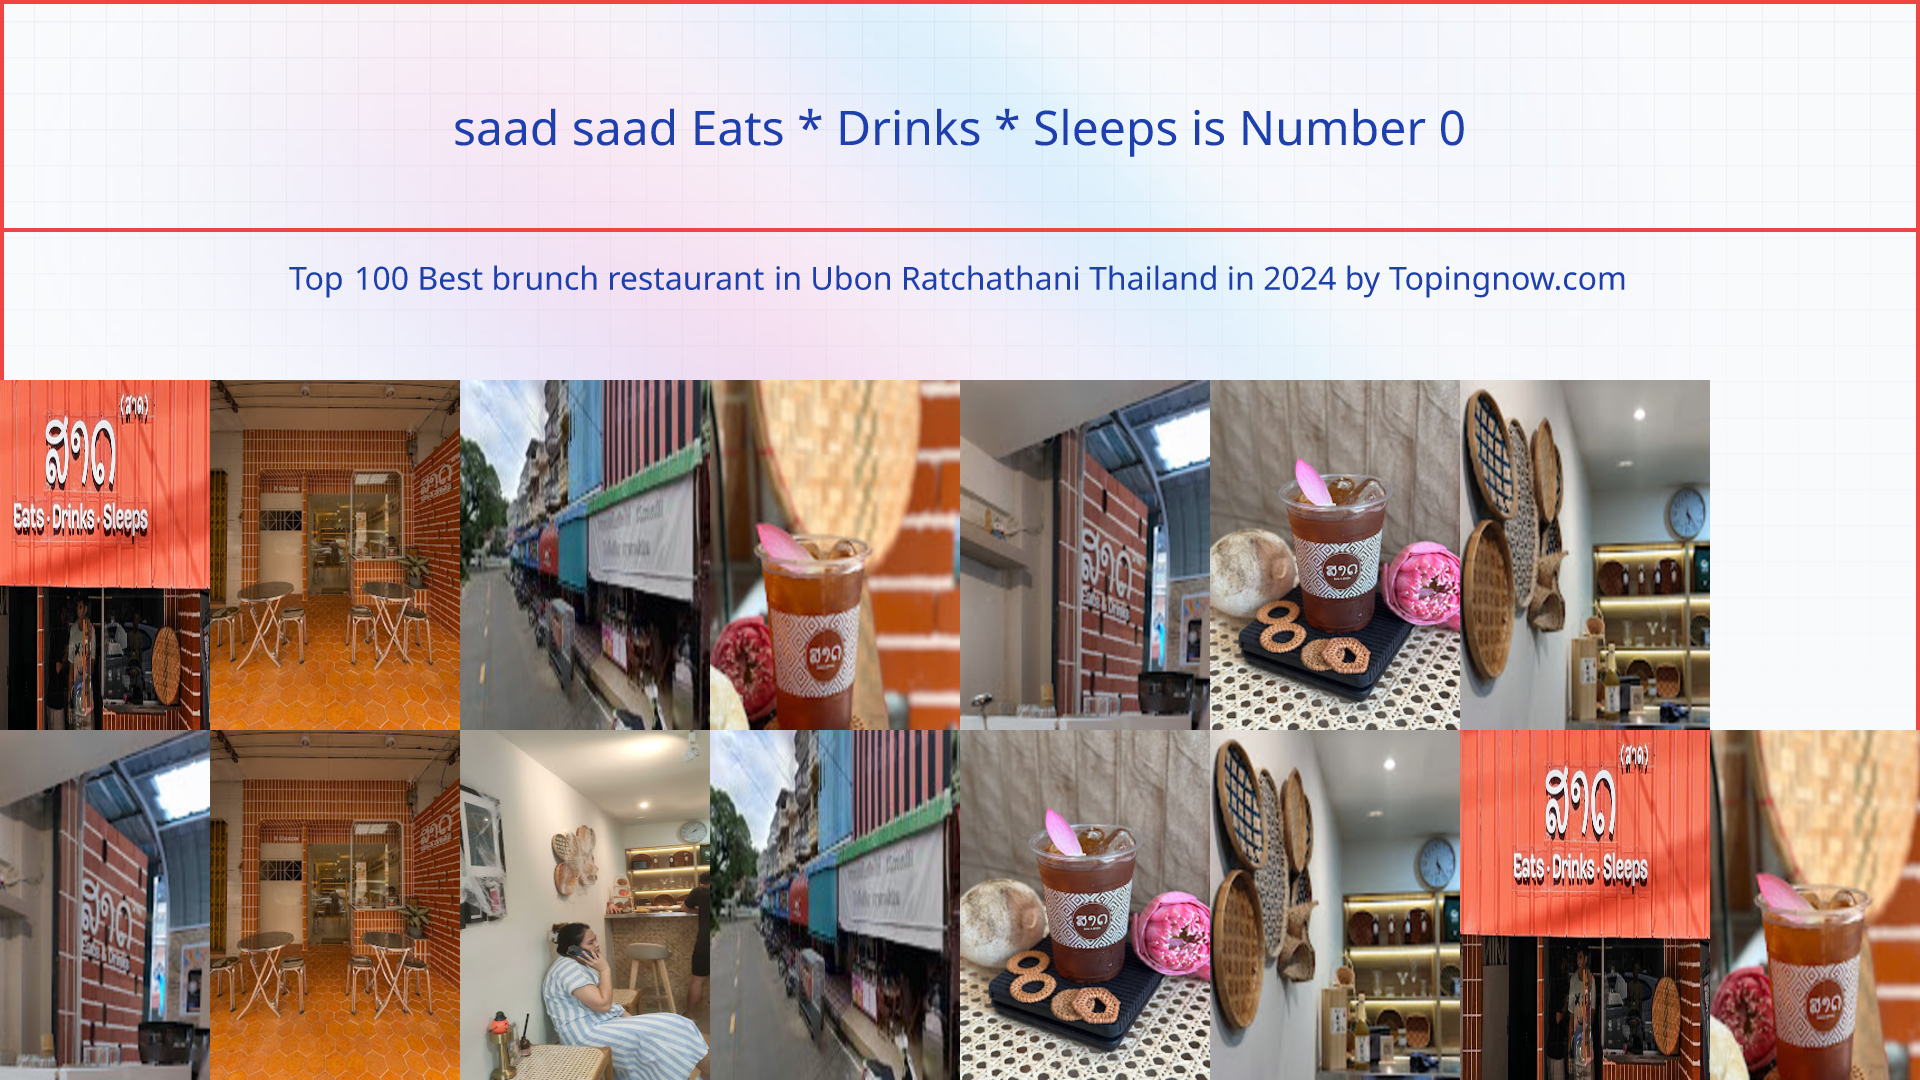 saad saad Eats * Drinks * Sleeps: Top 100 Best brunch restaurant in Ubon Ratchathani Thailand in 2024